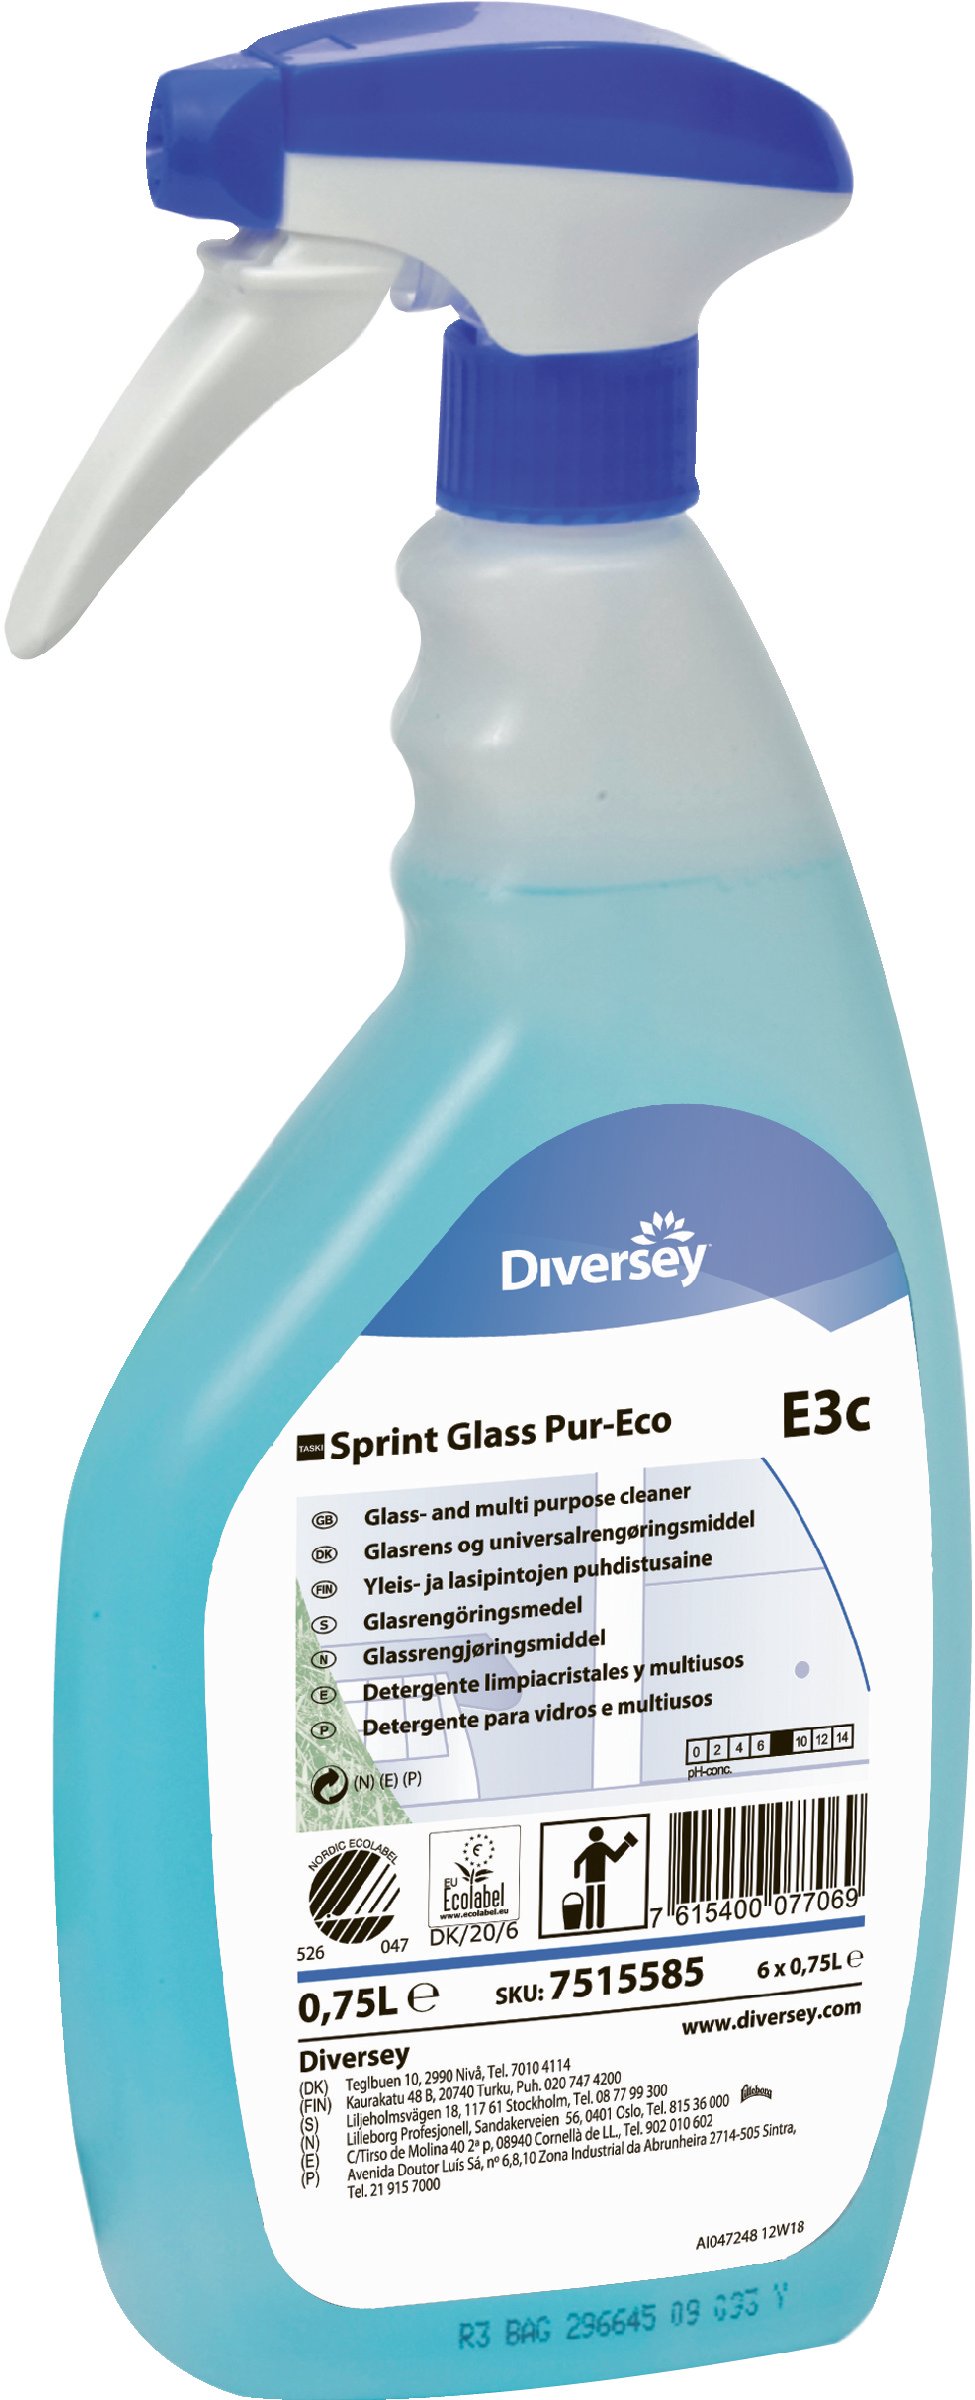 Fönsterputs Diversey Taski Sprint Glass Pur-Eco E3c 750ml